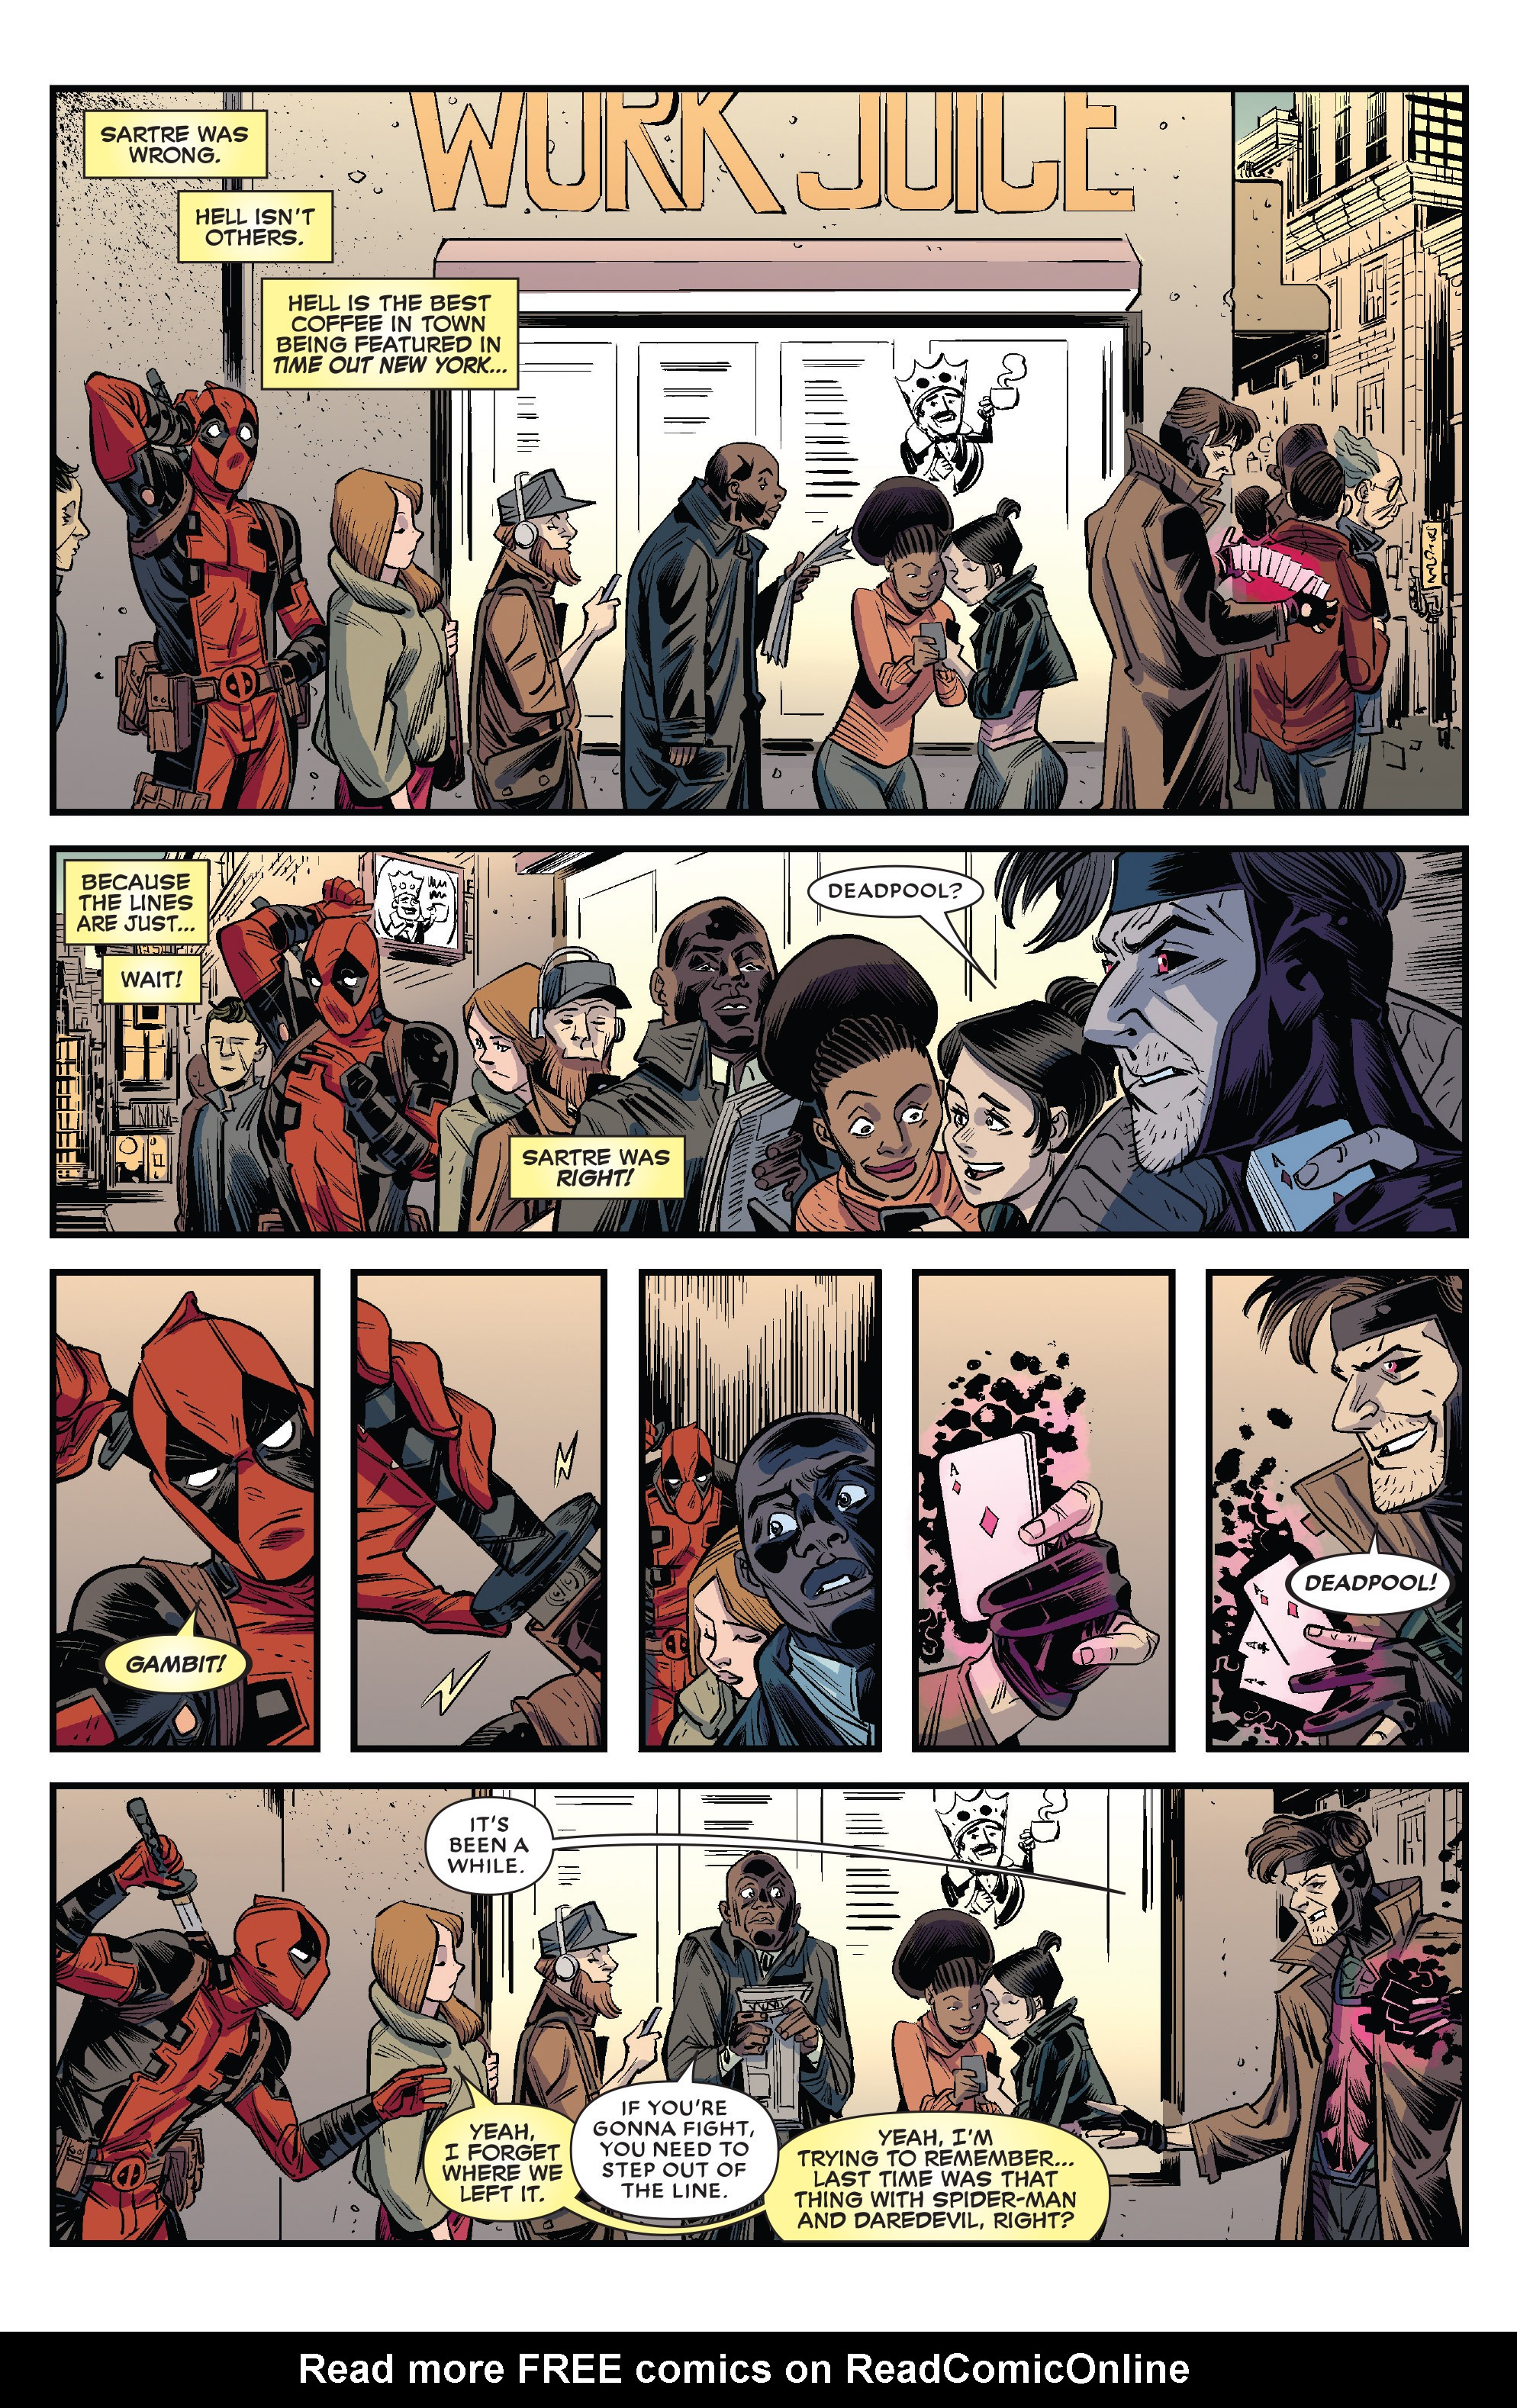 Deadpool V Gambit Issue 1 Viewcomic Reading Comics Online